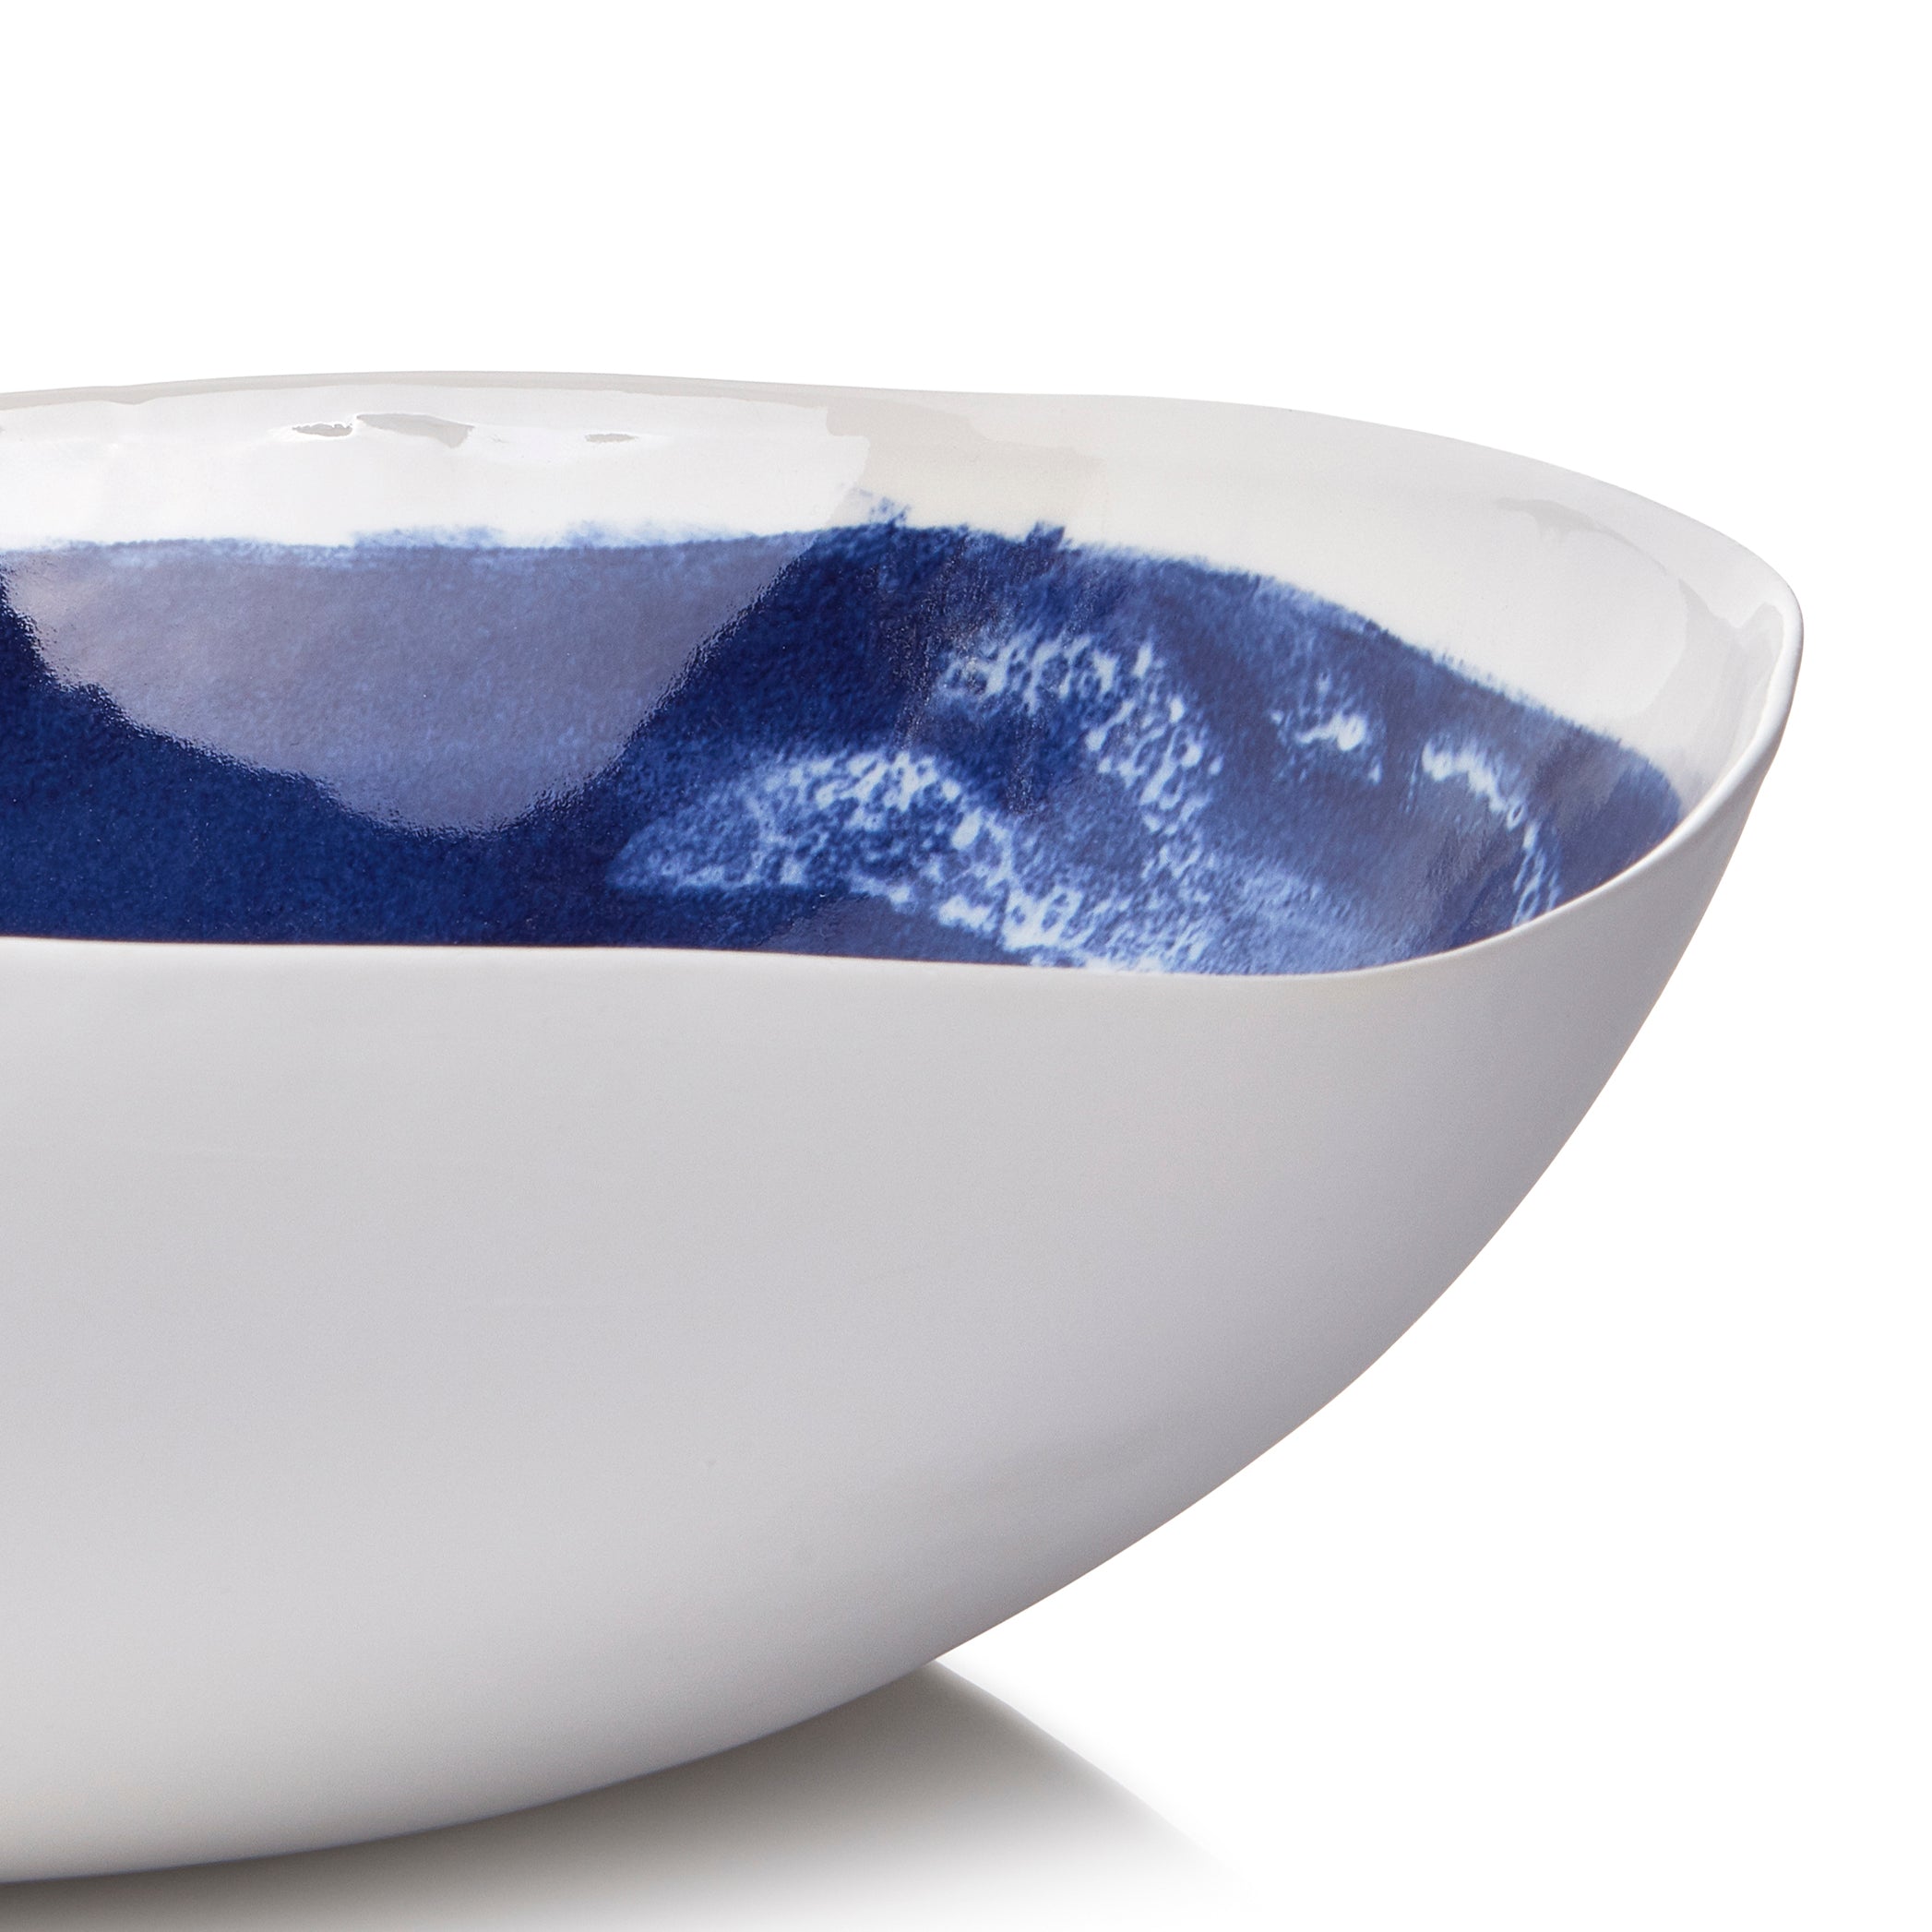 Summerill & Bishop Handmade 43cm Porcelain Extra Large Salad Bowl In Blue Glaze with White Filodendro Leaf